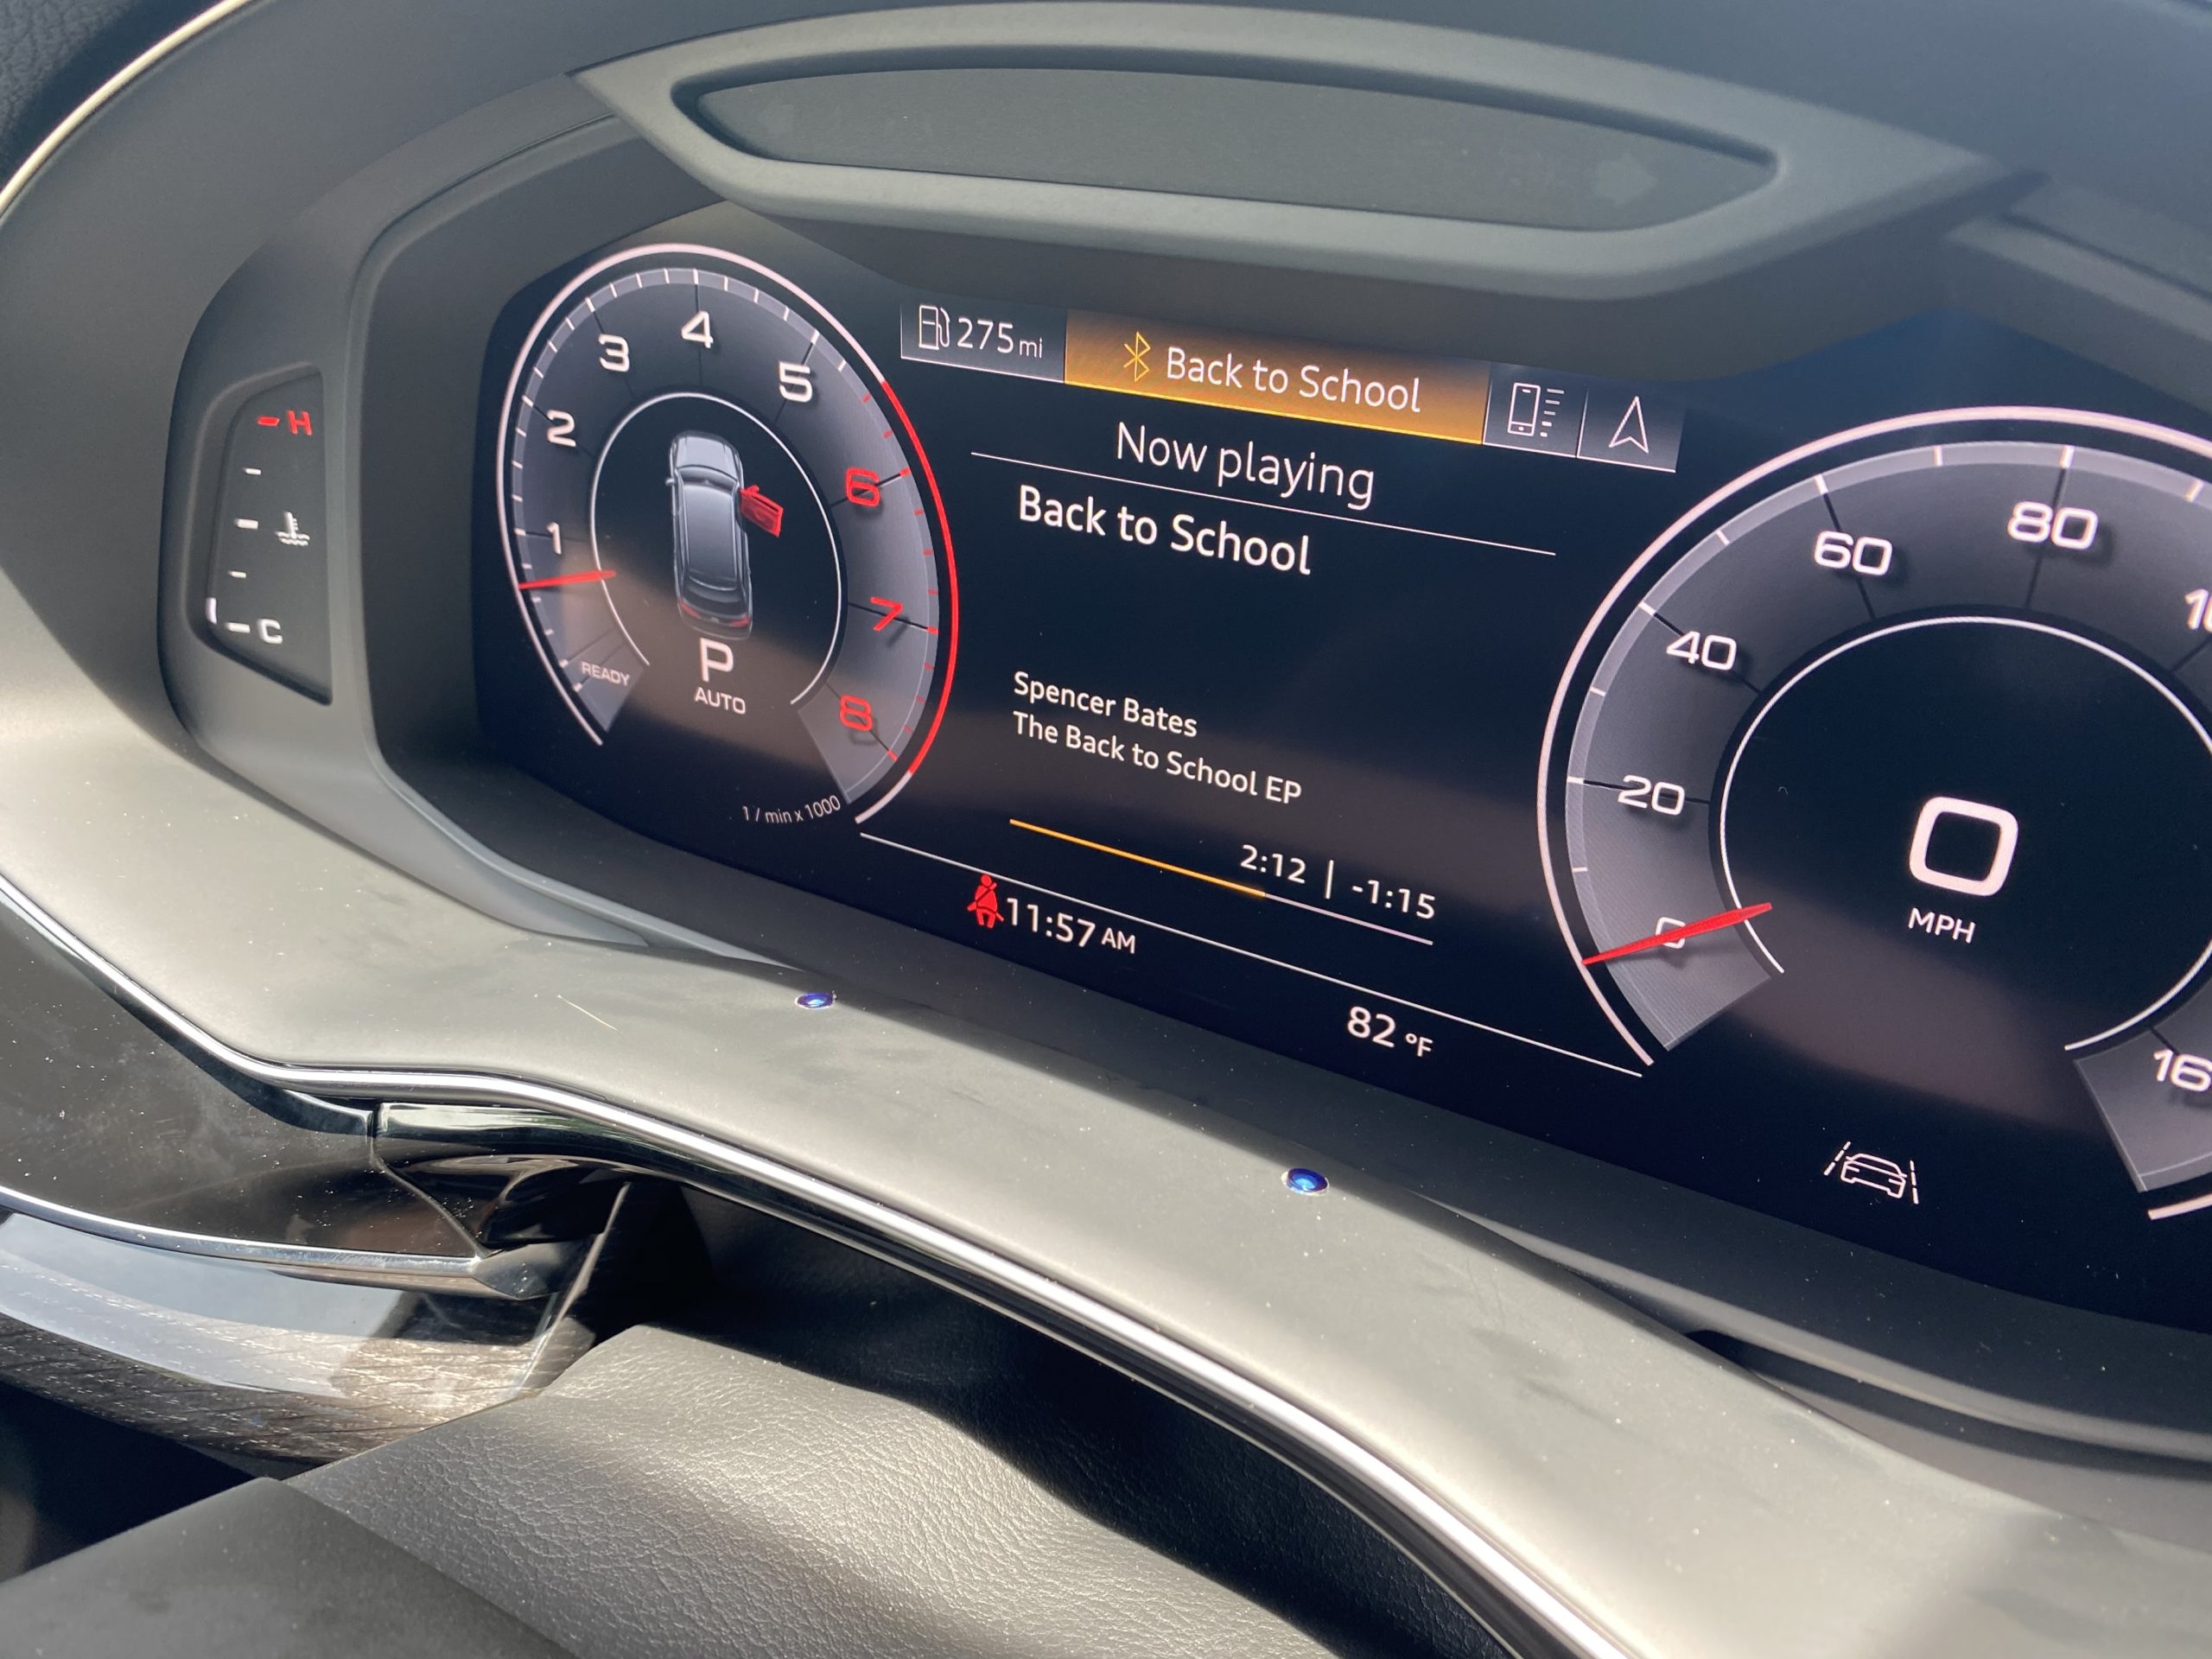 K40 radar detector alert led's in a 2020 Audi Q7